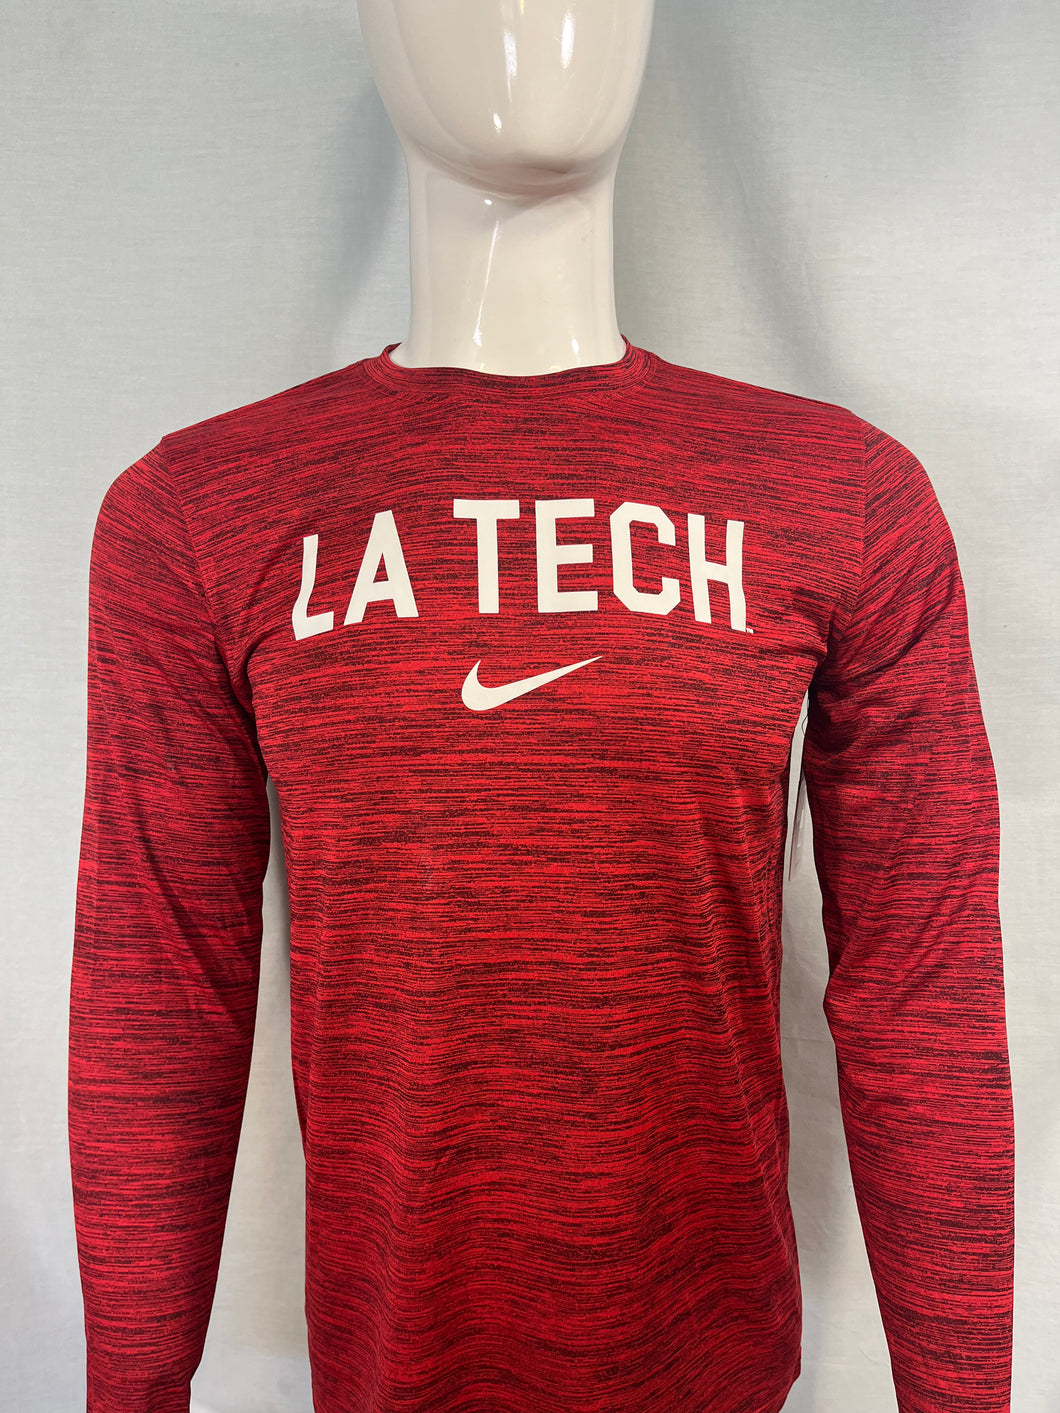 LaTech Nike Velocity Red Long Sleeve